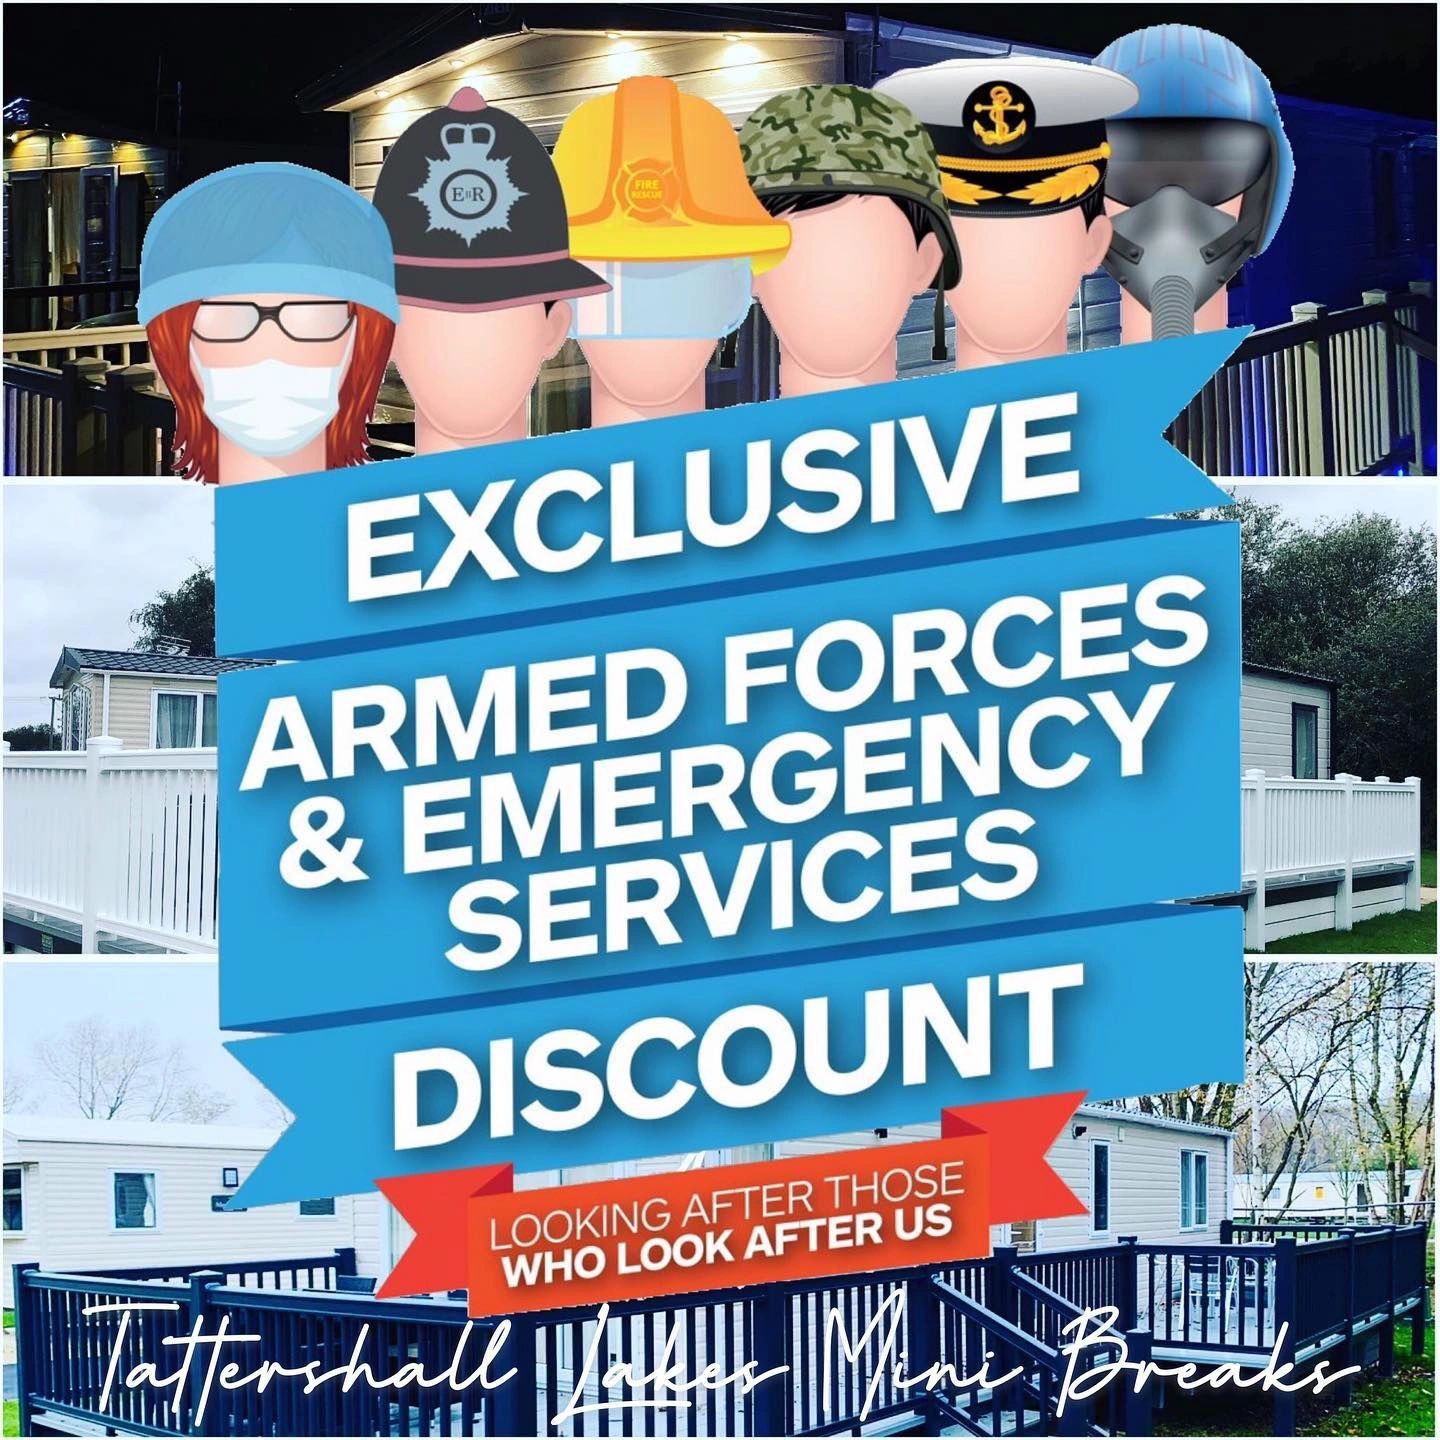 Army, Royal Navy, RAF, Royal Air Force, Police, Fire, NHS, discounts Blue Light Card